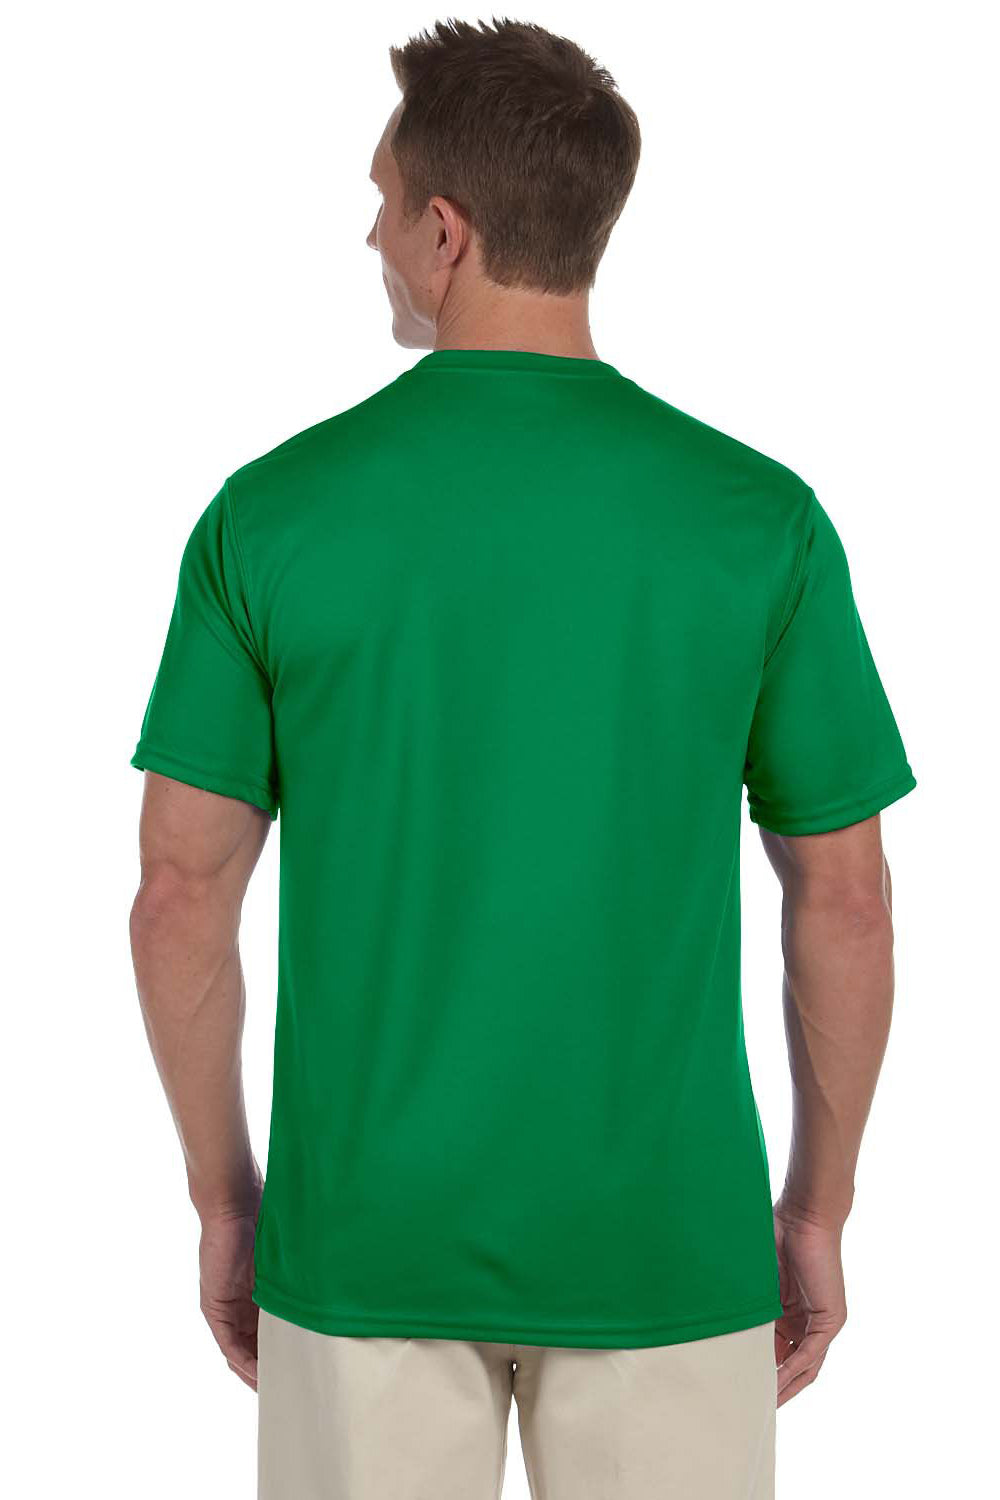 Augusta Sportswear 790 Mens Moisture Wicking Short Sleeve Crewneck T-Shirt Kelly Green Model Back